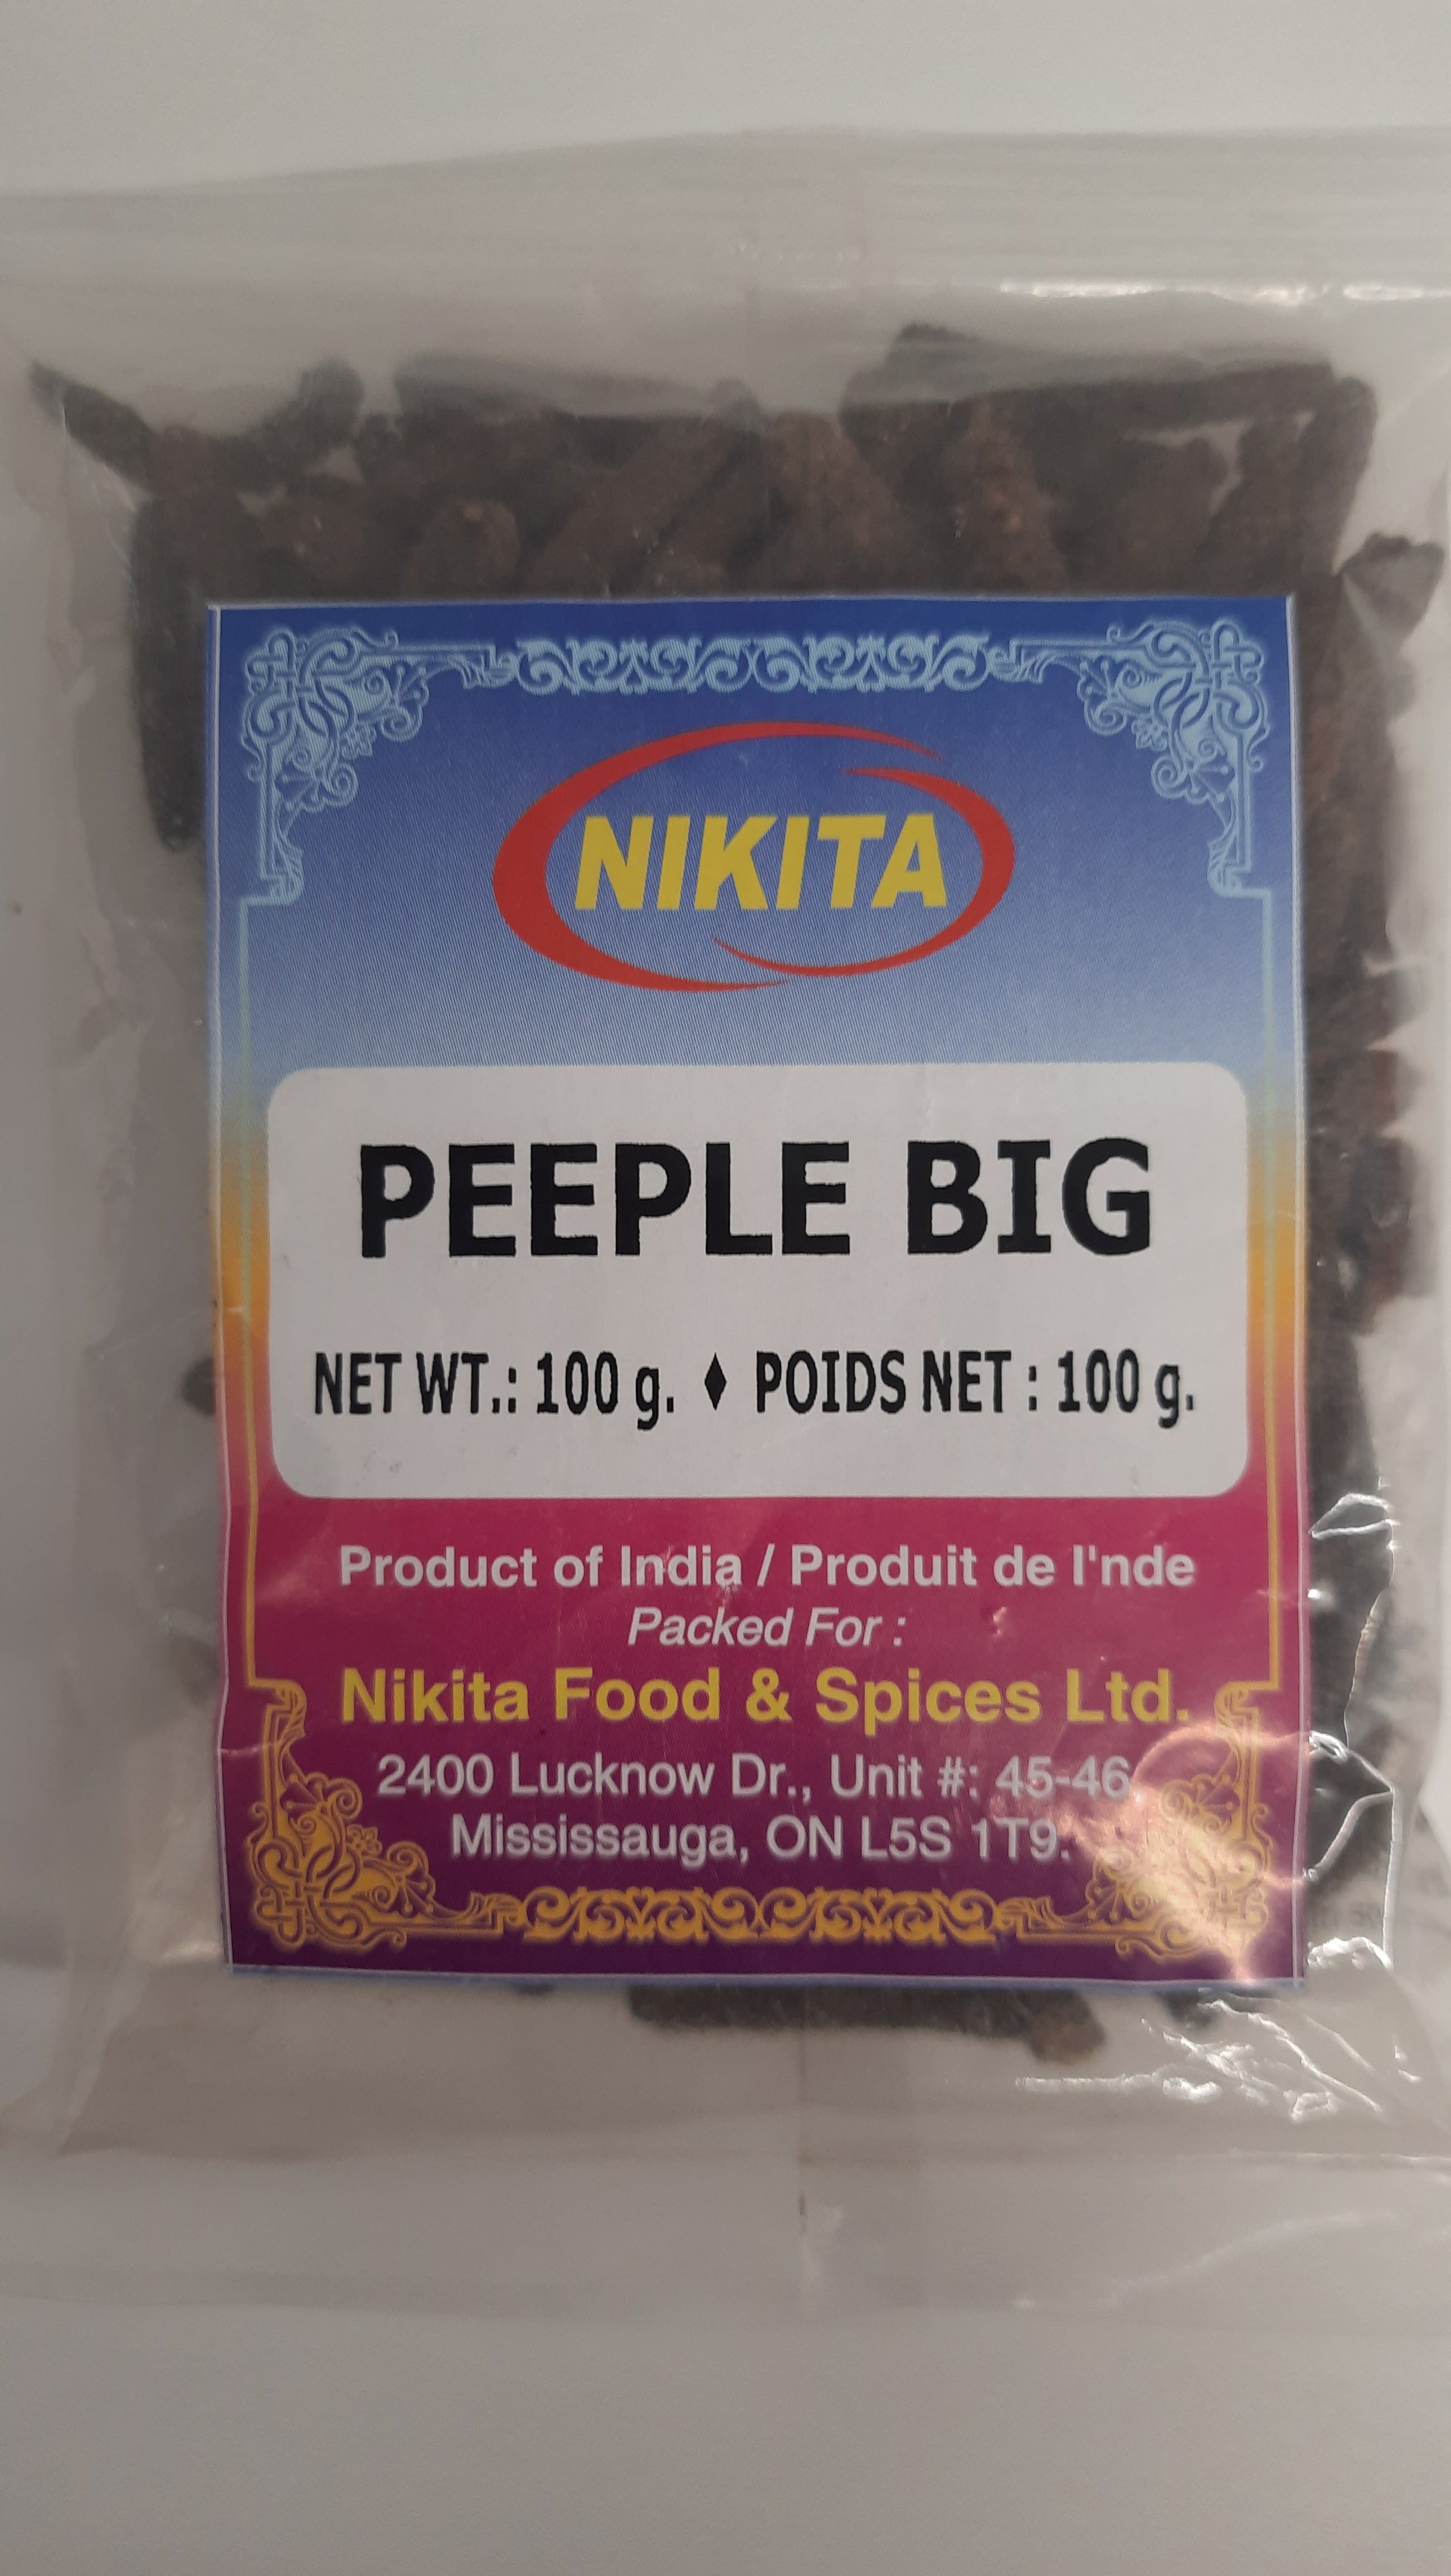 Nikita - Peeple Big 100g